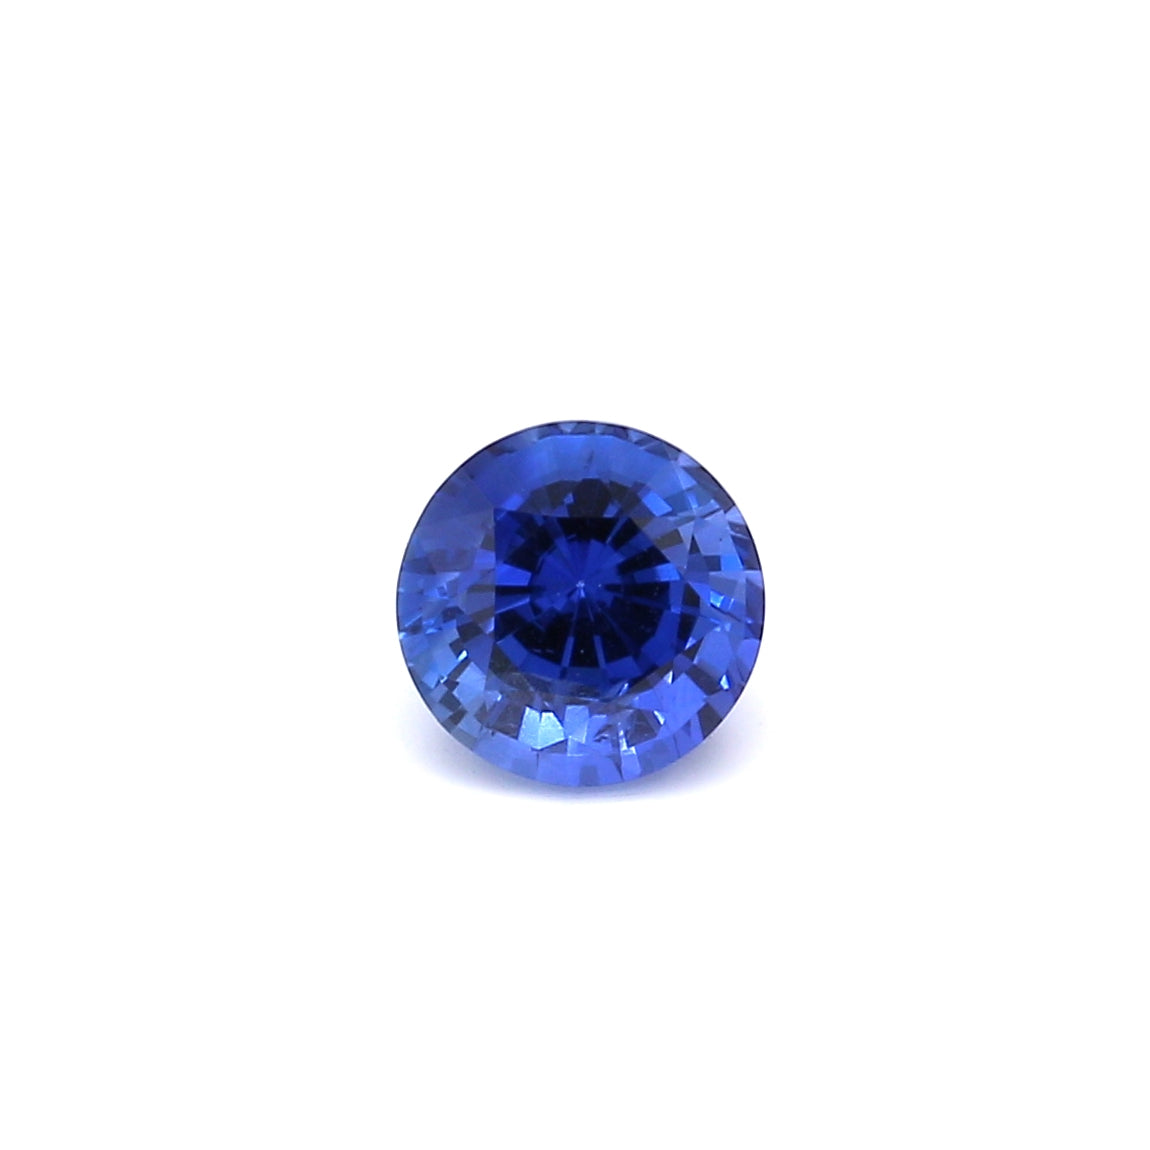 1.42ct Round Sapphire, Heated, Sri Lanka - 6.47 x 6.52 x 4.57mm